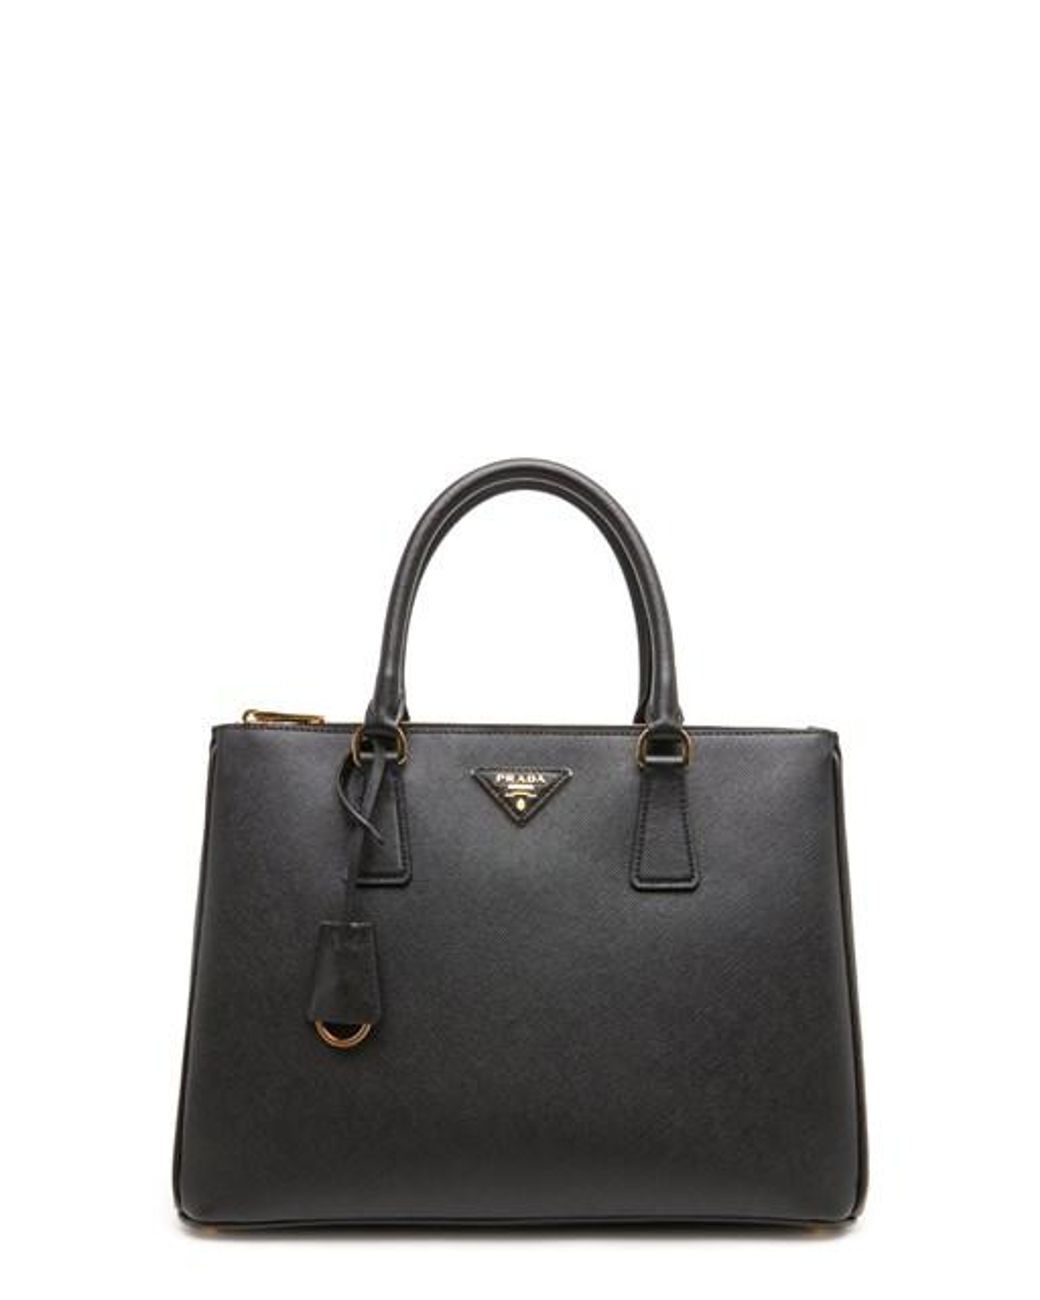 Prada Large Handbags Sale - www.edoc.com.vn 1694890369